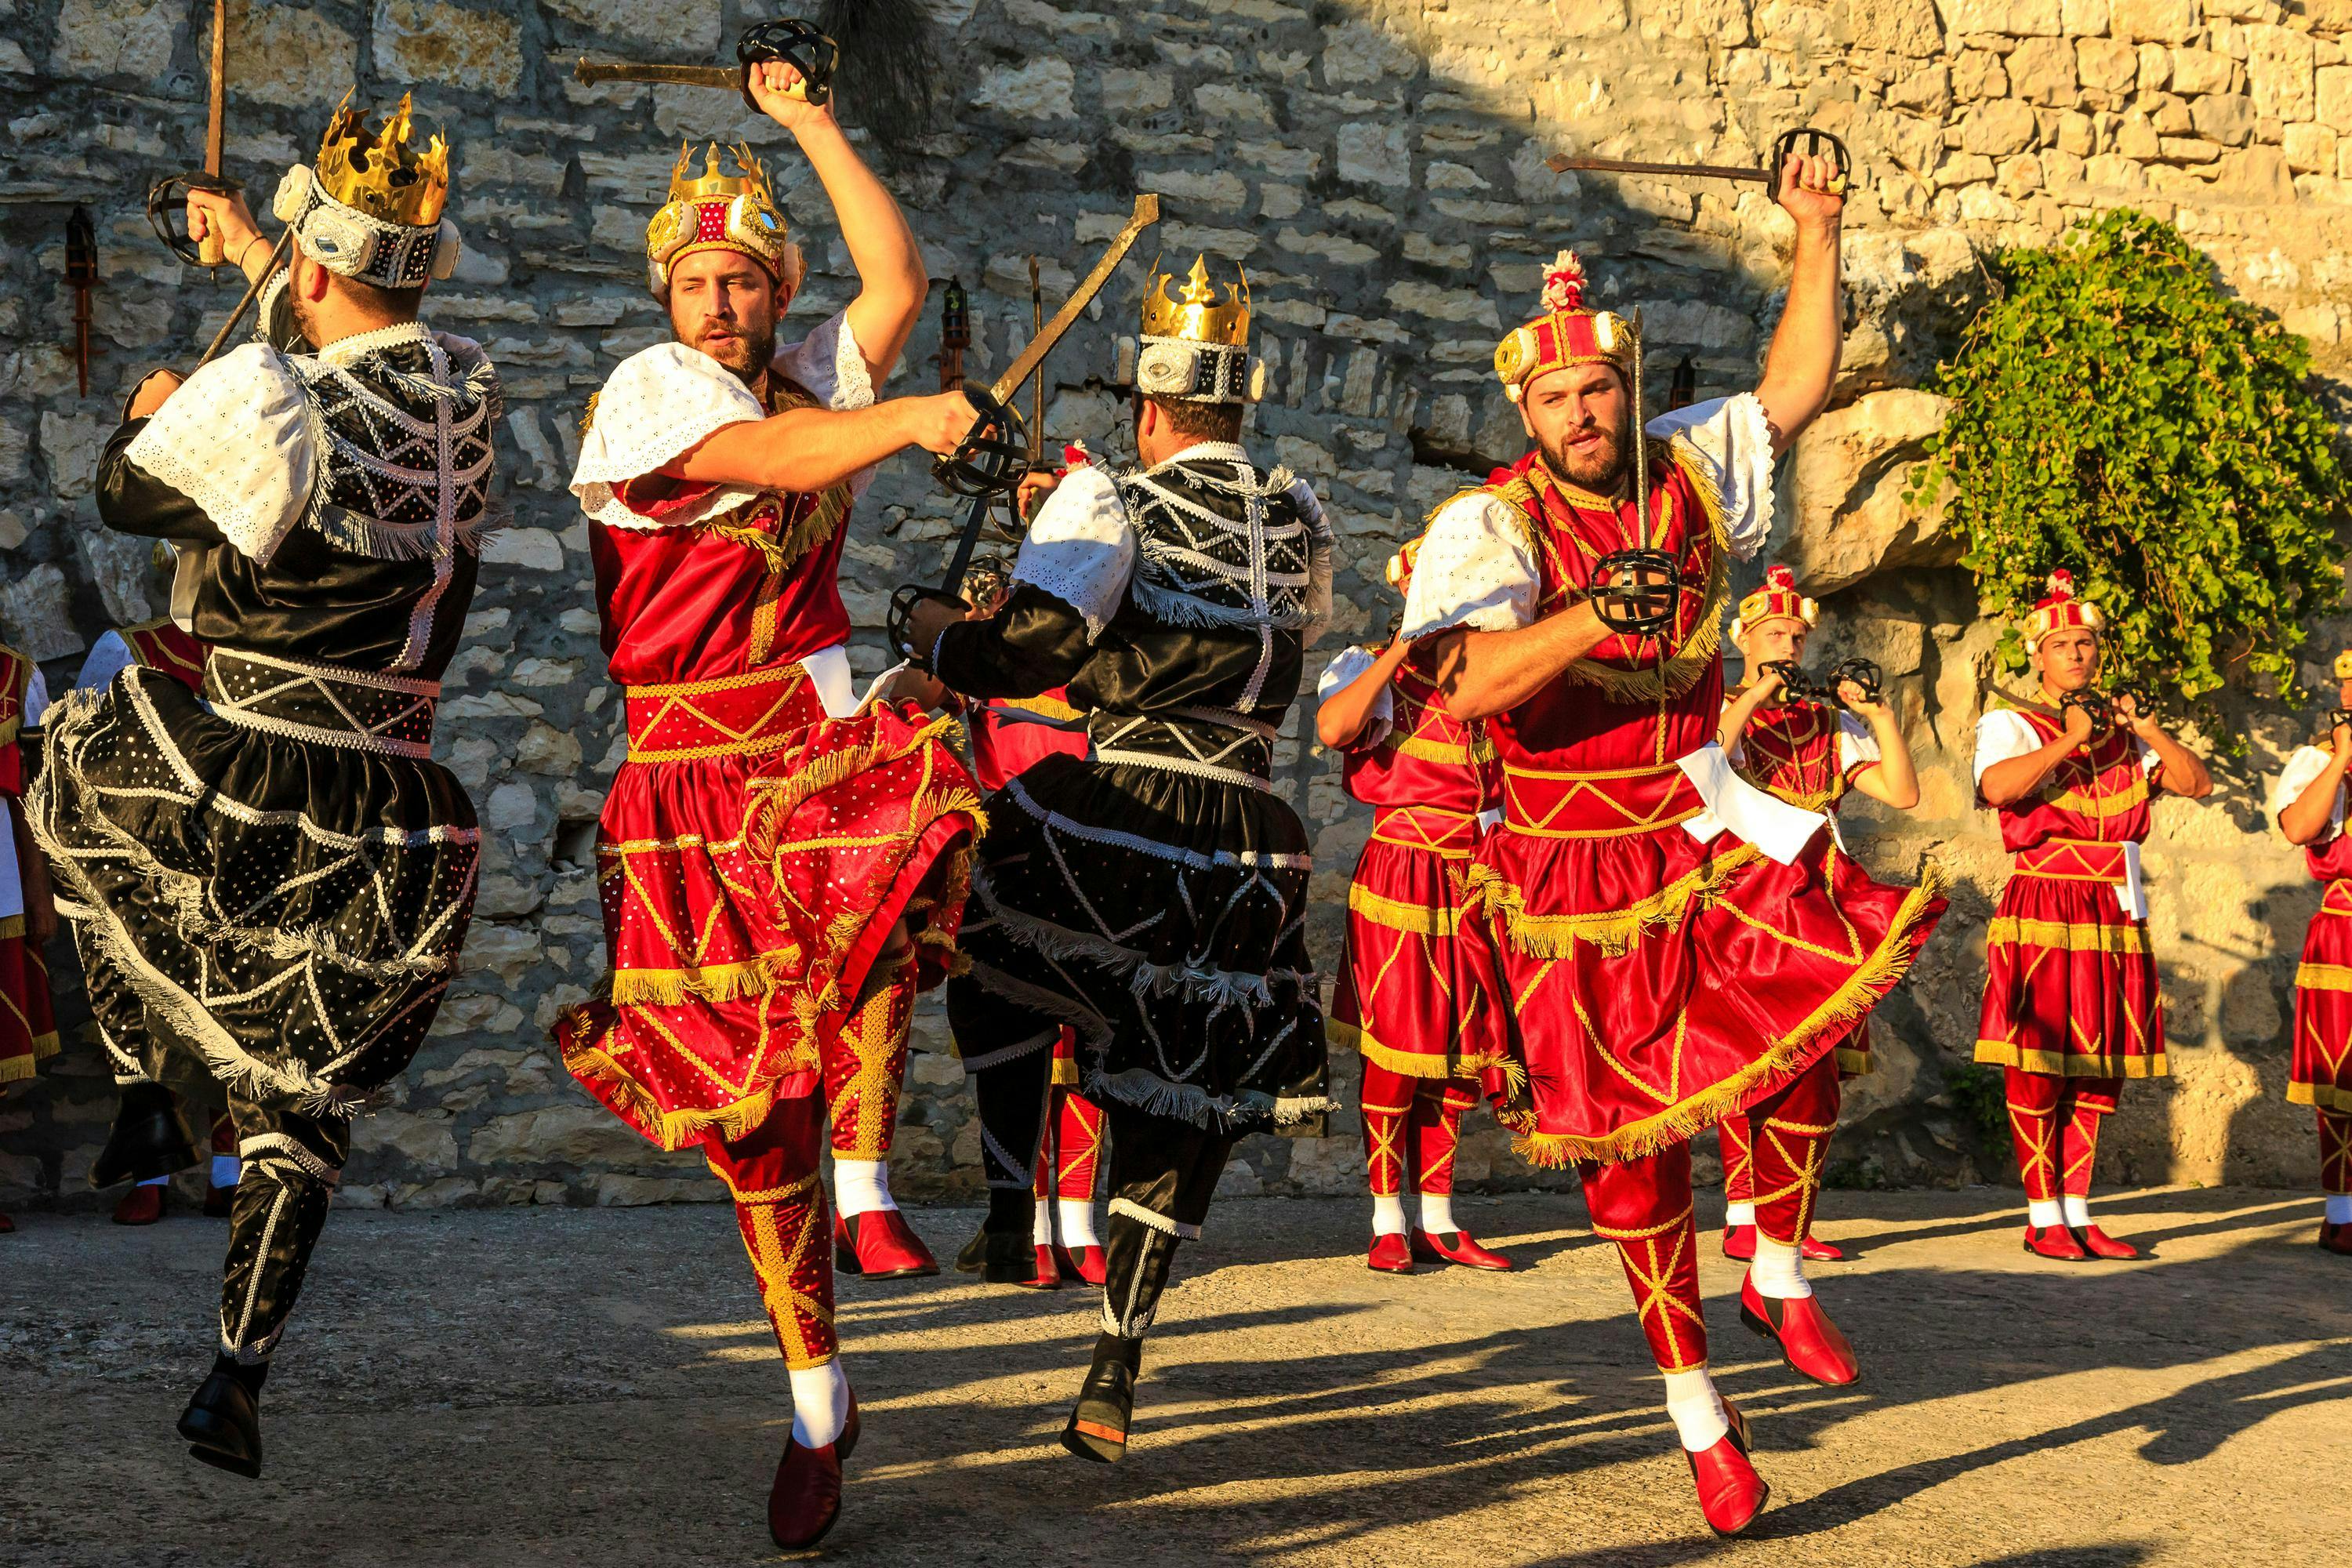 Locals preform the Moreska Sword Dance in Old Town Korcula, Dalmatian, Croatia.